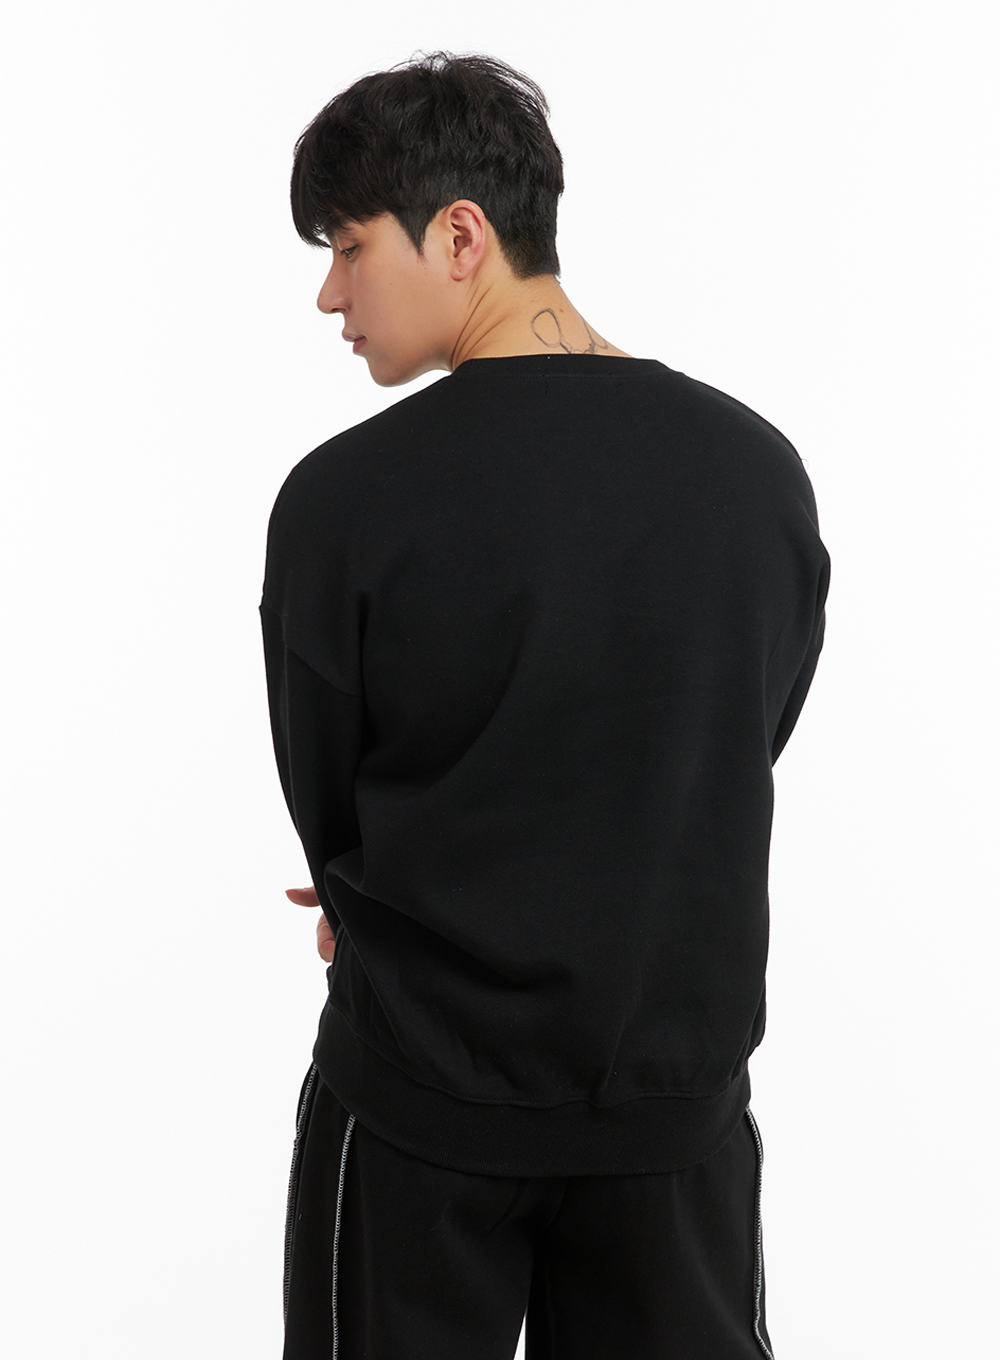 mens-basic-cotton-sweatshirt-ia402